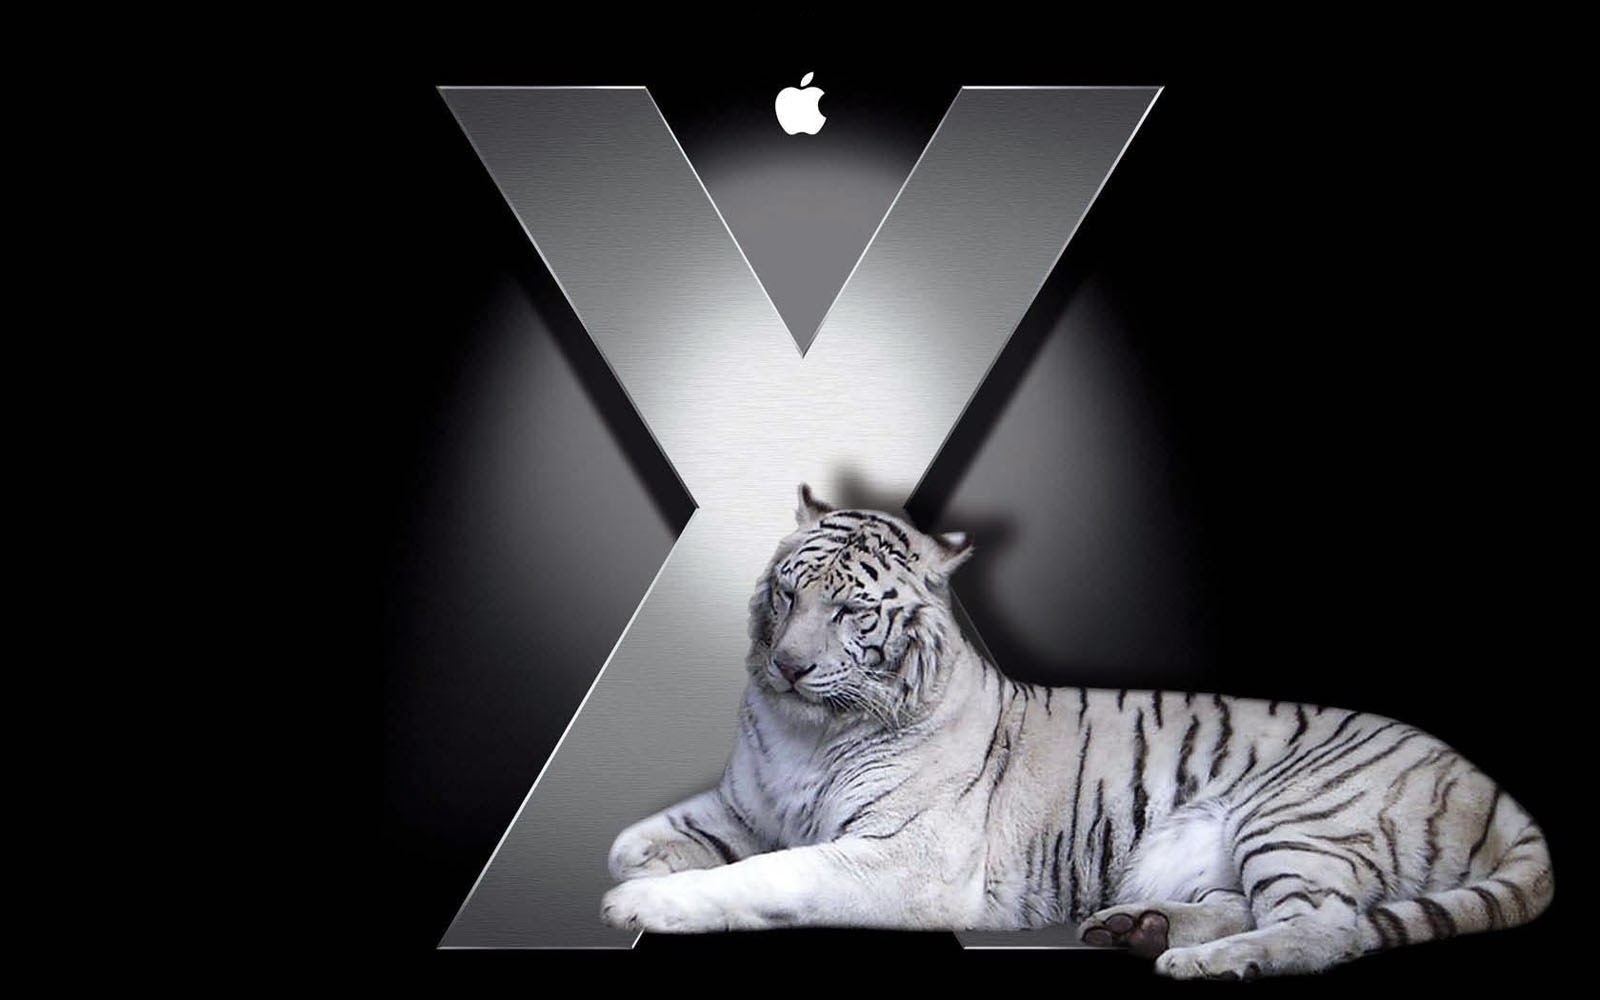  Mac OS X Tiger Wallpapers Mac OS X Tiger DesktopWallpapers Mac